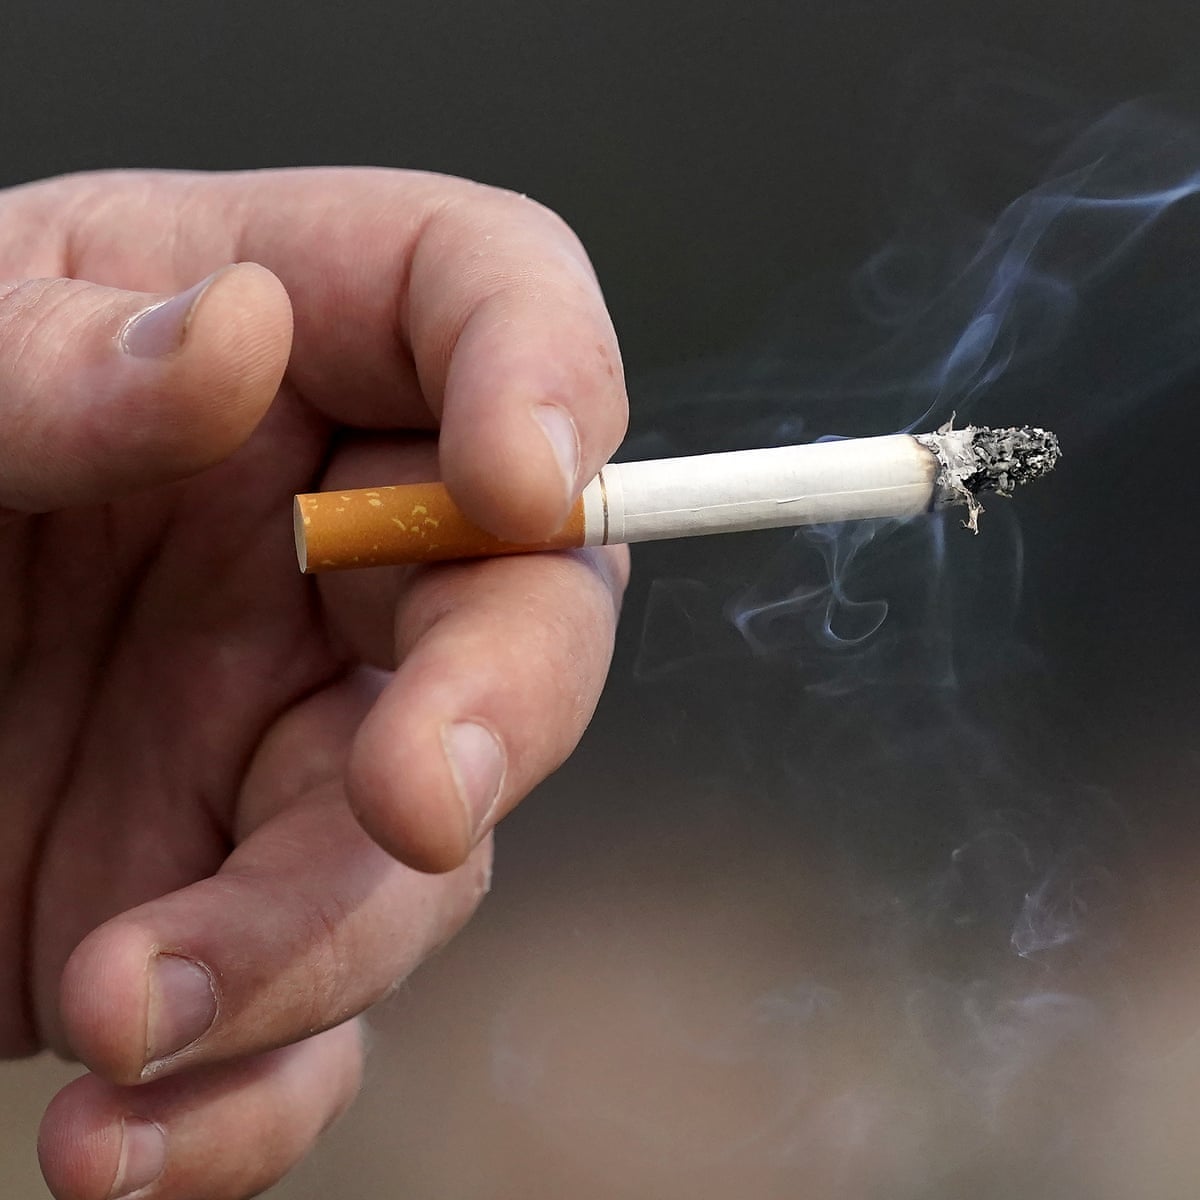 San Francisco to ban tobacco smoking in apartments – but not cannabis | San  Francisco | The Guardian